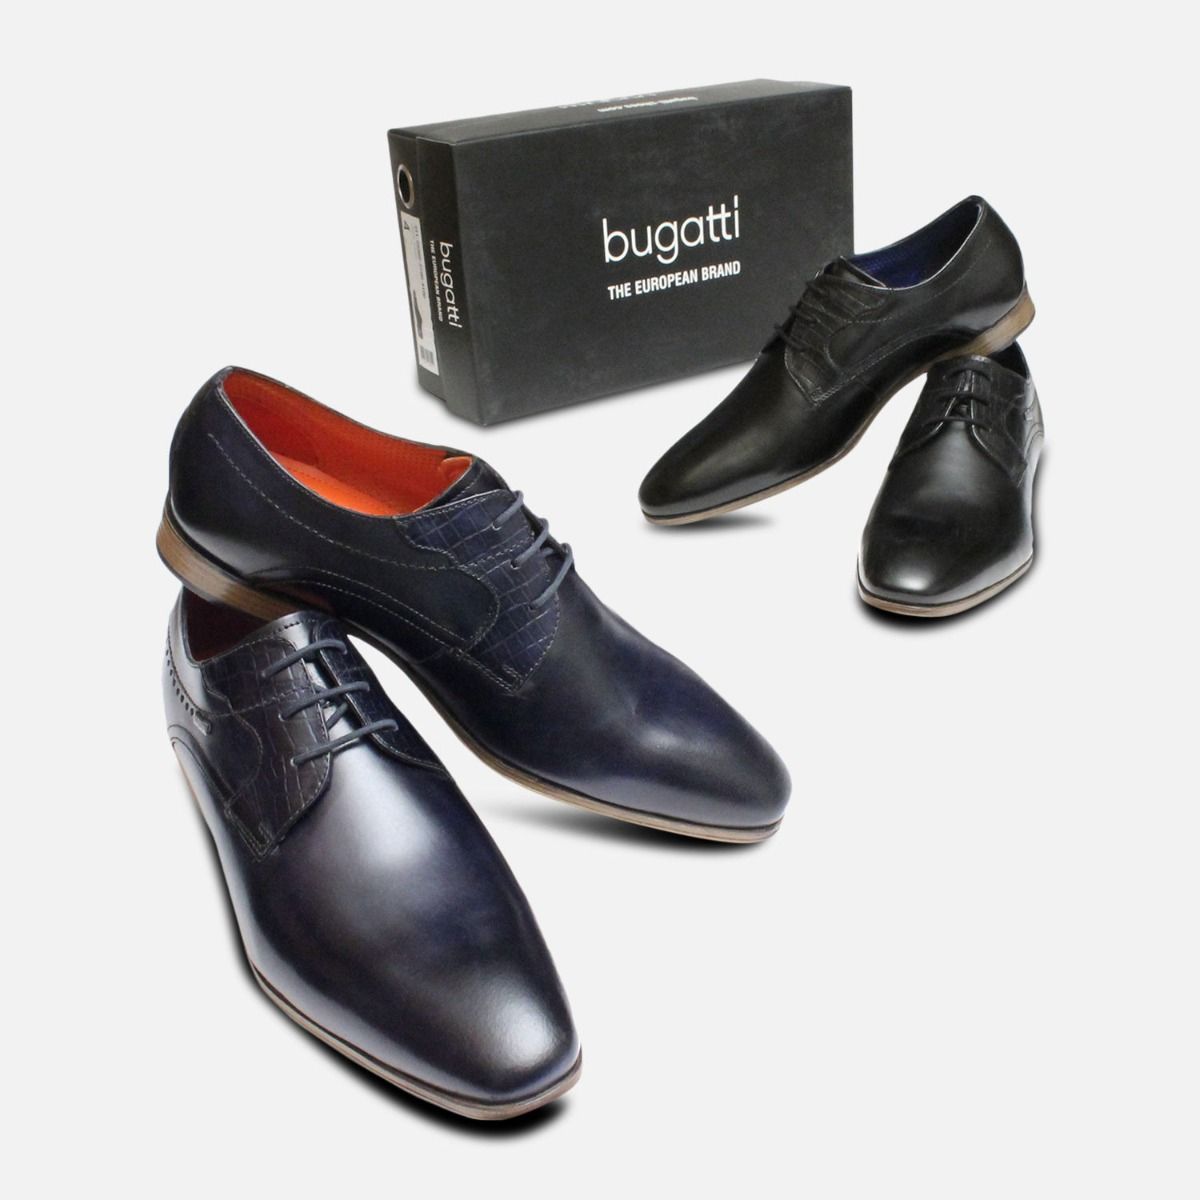 bugatti shoes brand 